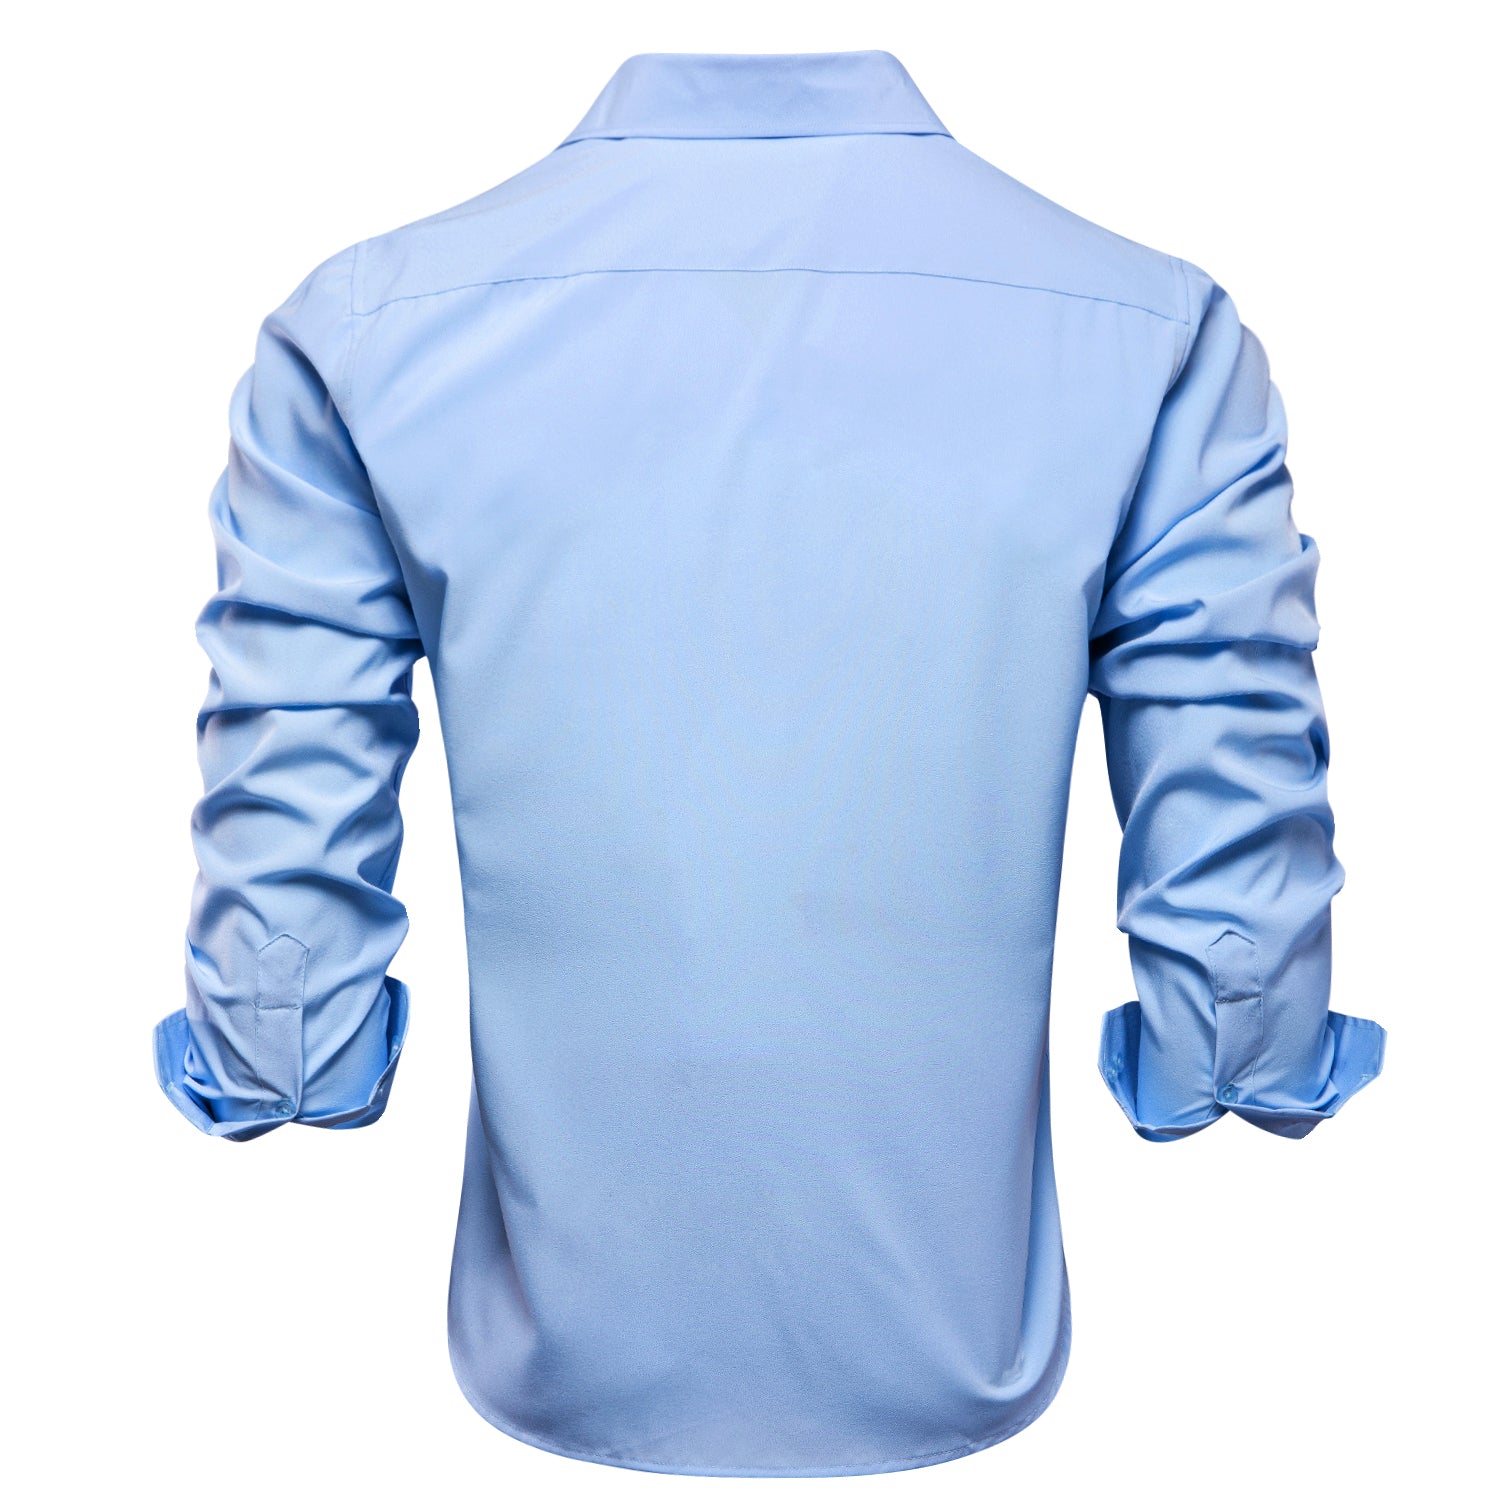 Sky Blue Stretch Men's Long Sleeve Shirt